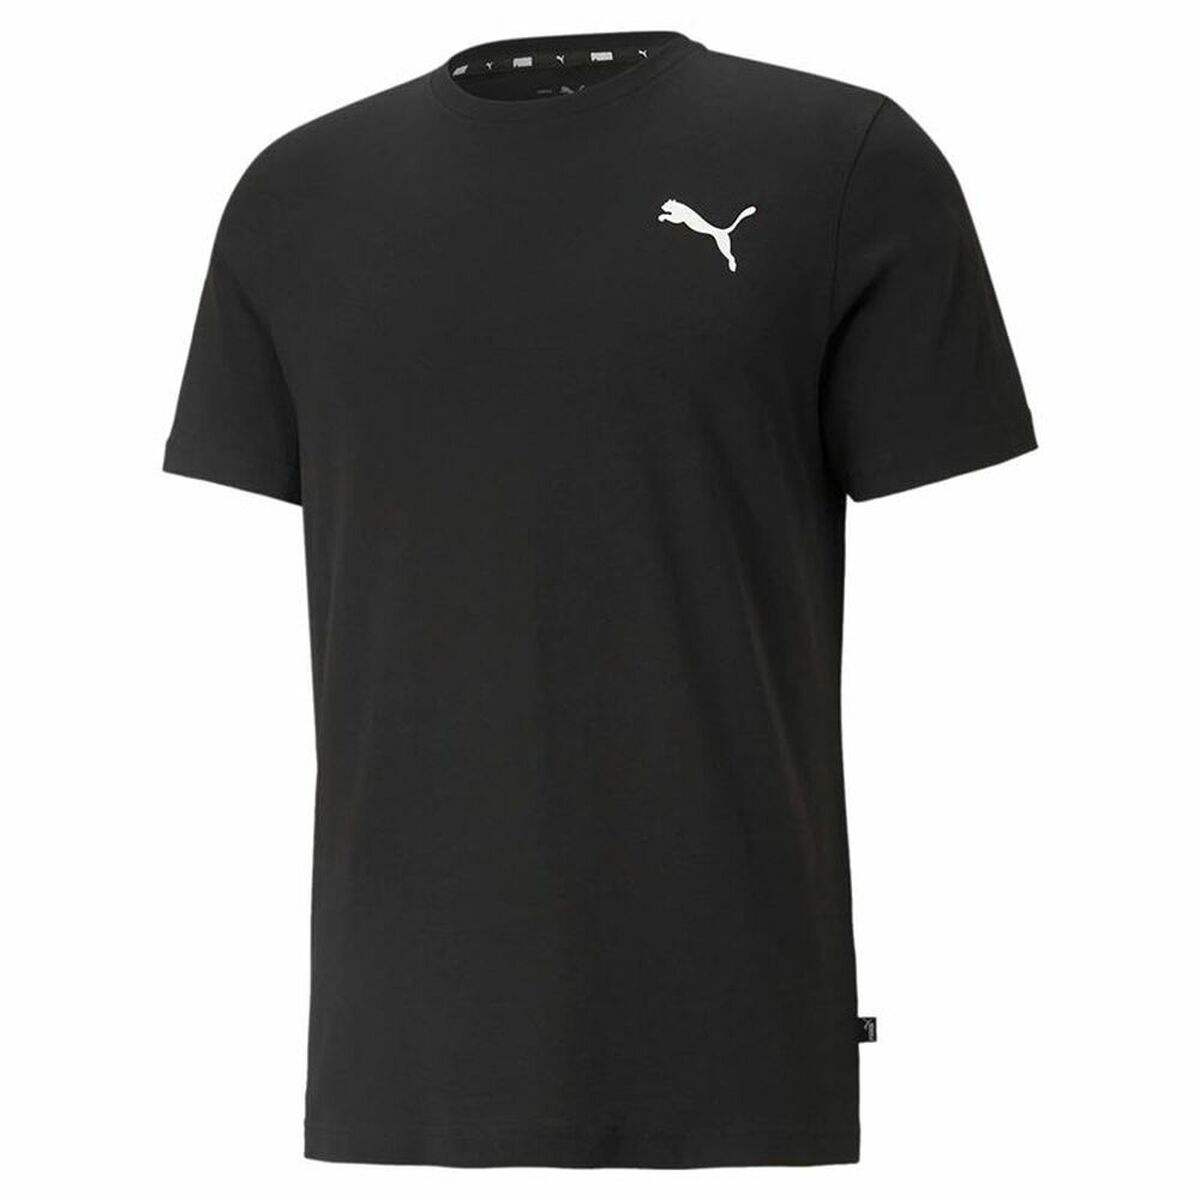 T-shirt à manches courtes homme Puma Noir (L) - Puma - Jardin D'Eyden - jardindeyden.fr